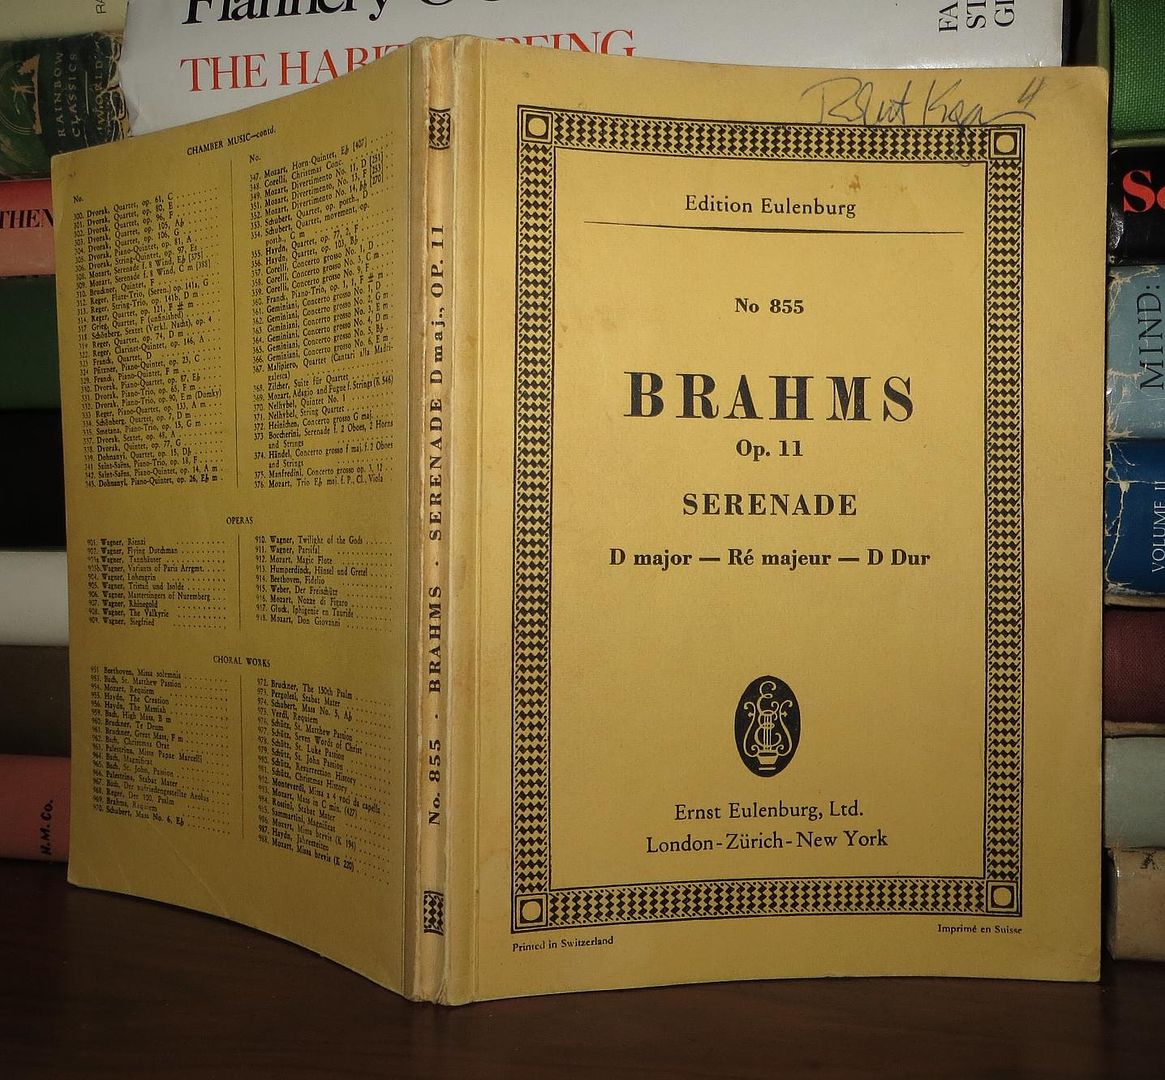 BRAHMS, JOHANNES - Serenade D Major for Full Orchestra, Op. 11